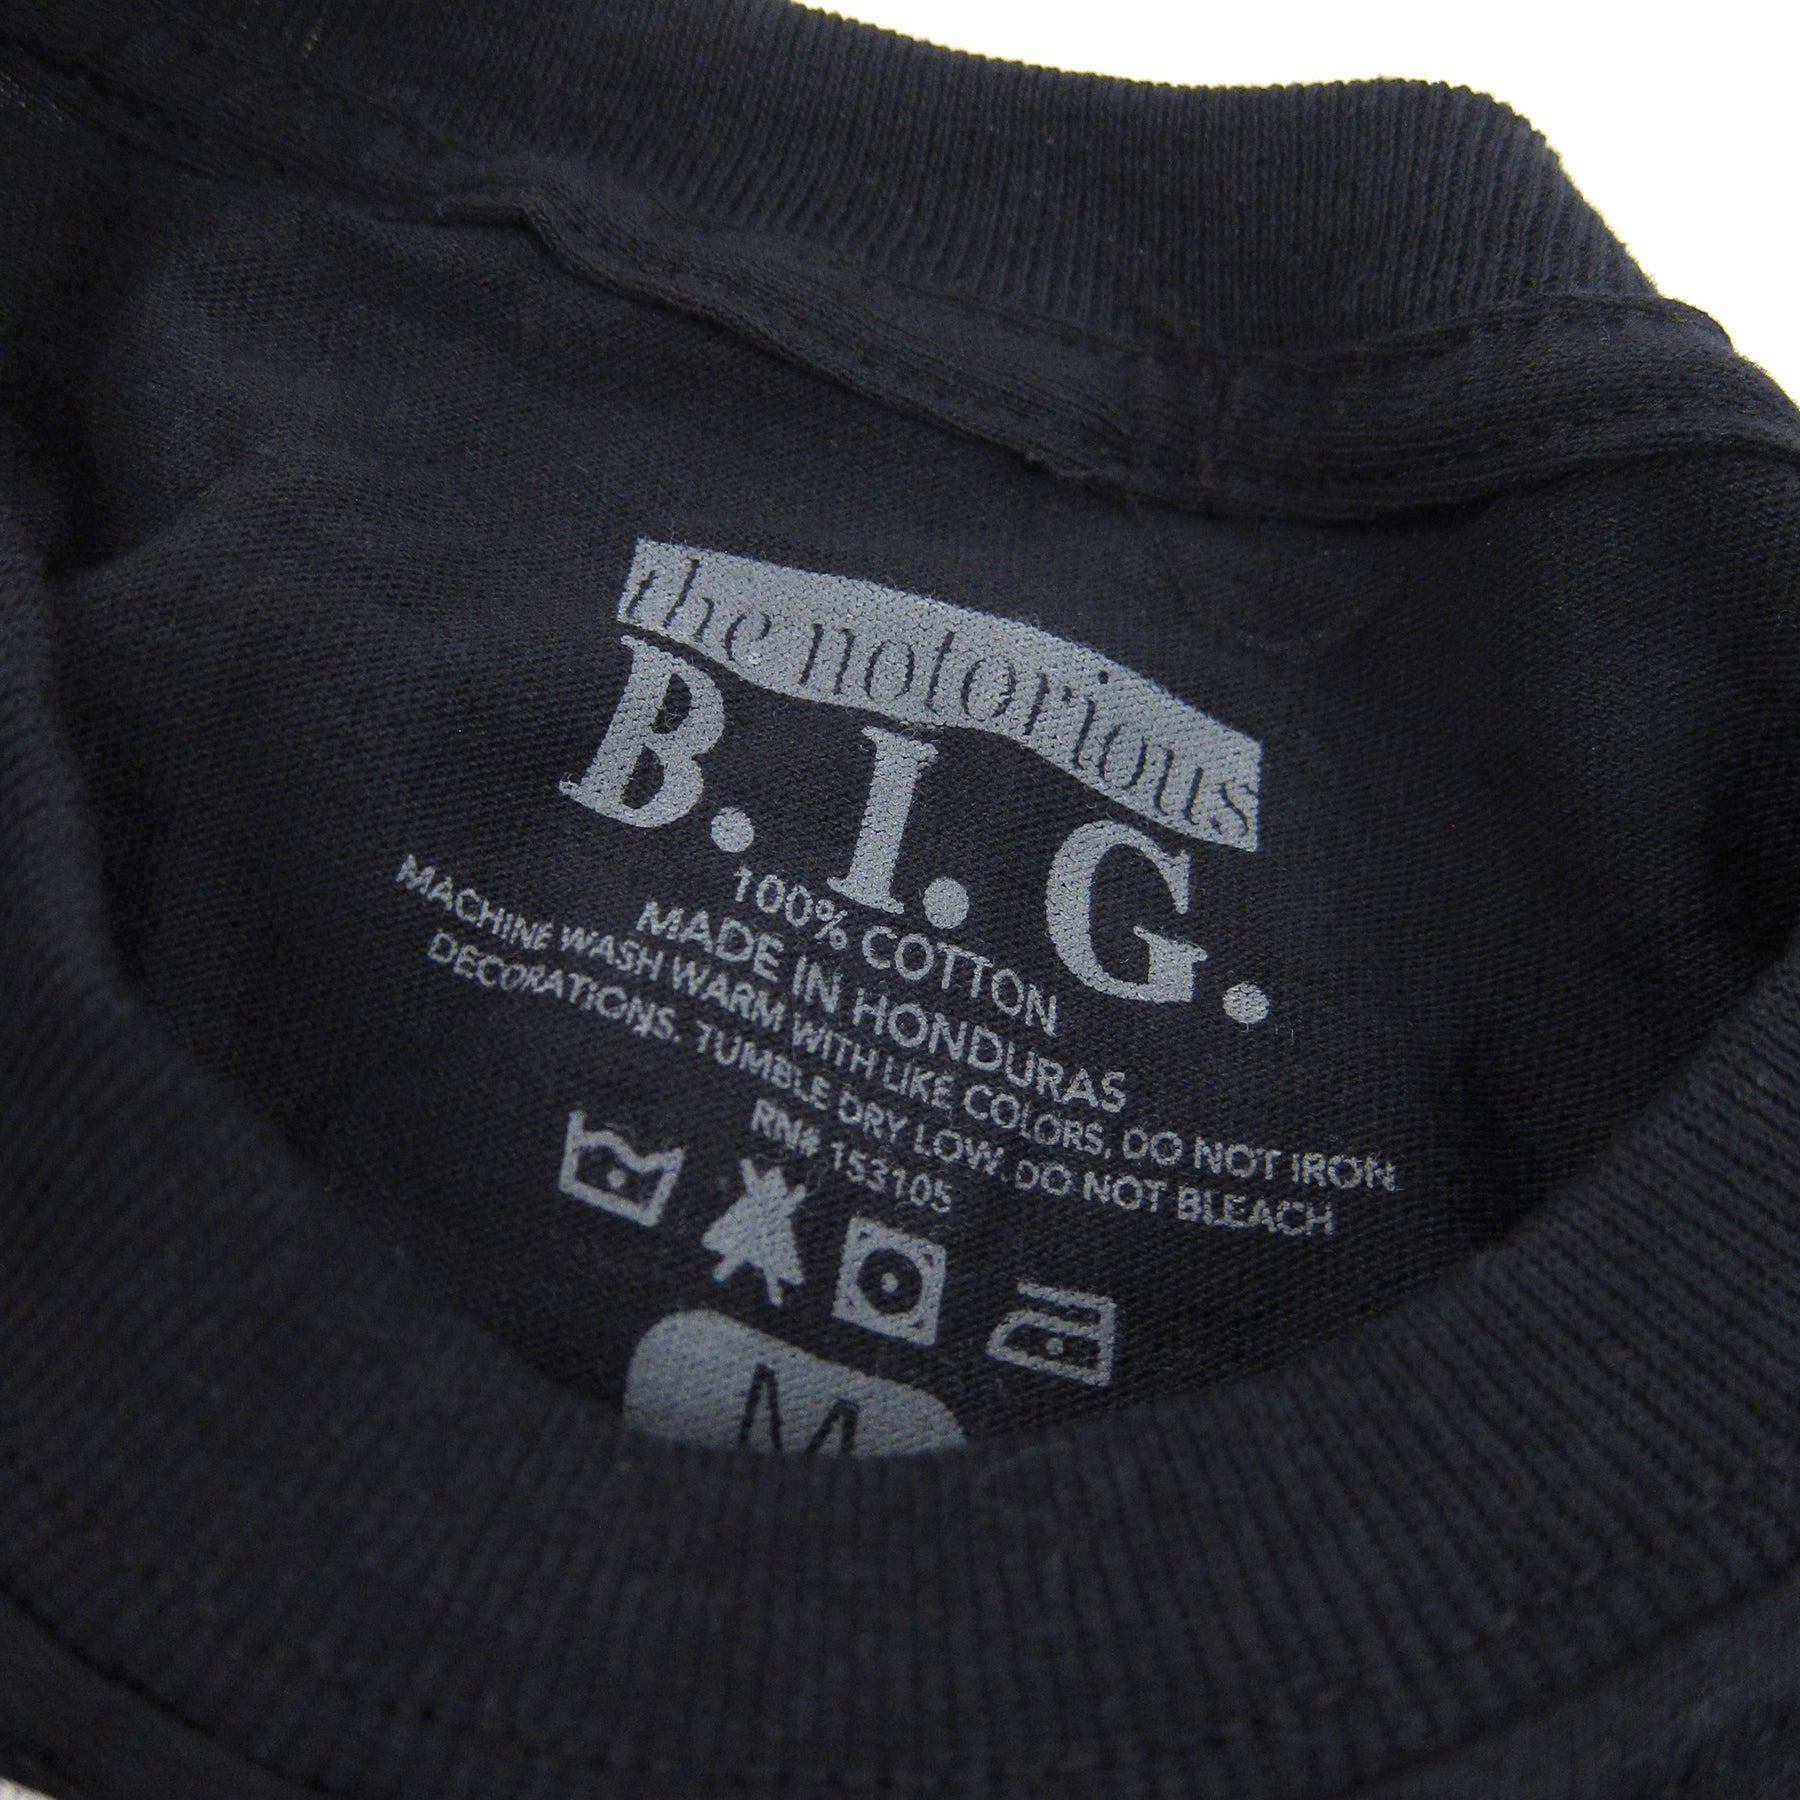 Notorious B.I.G.: Baby Shirt - Black – TurntableLab.com